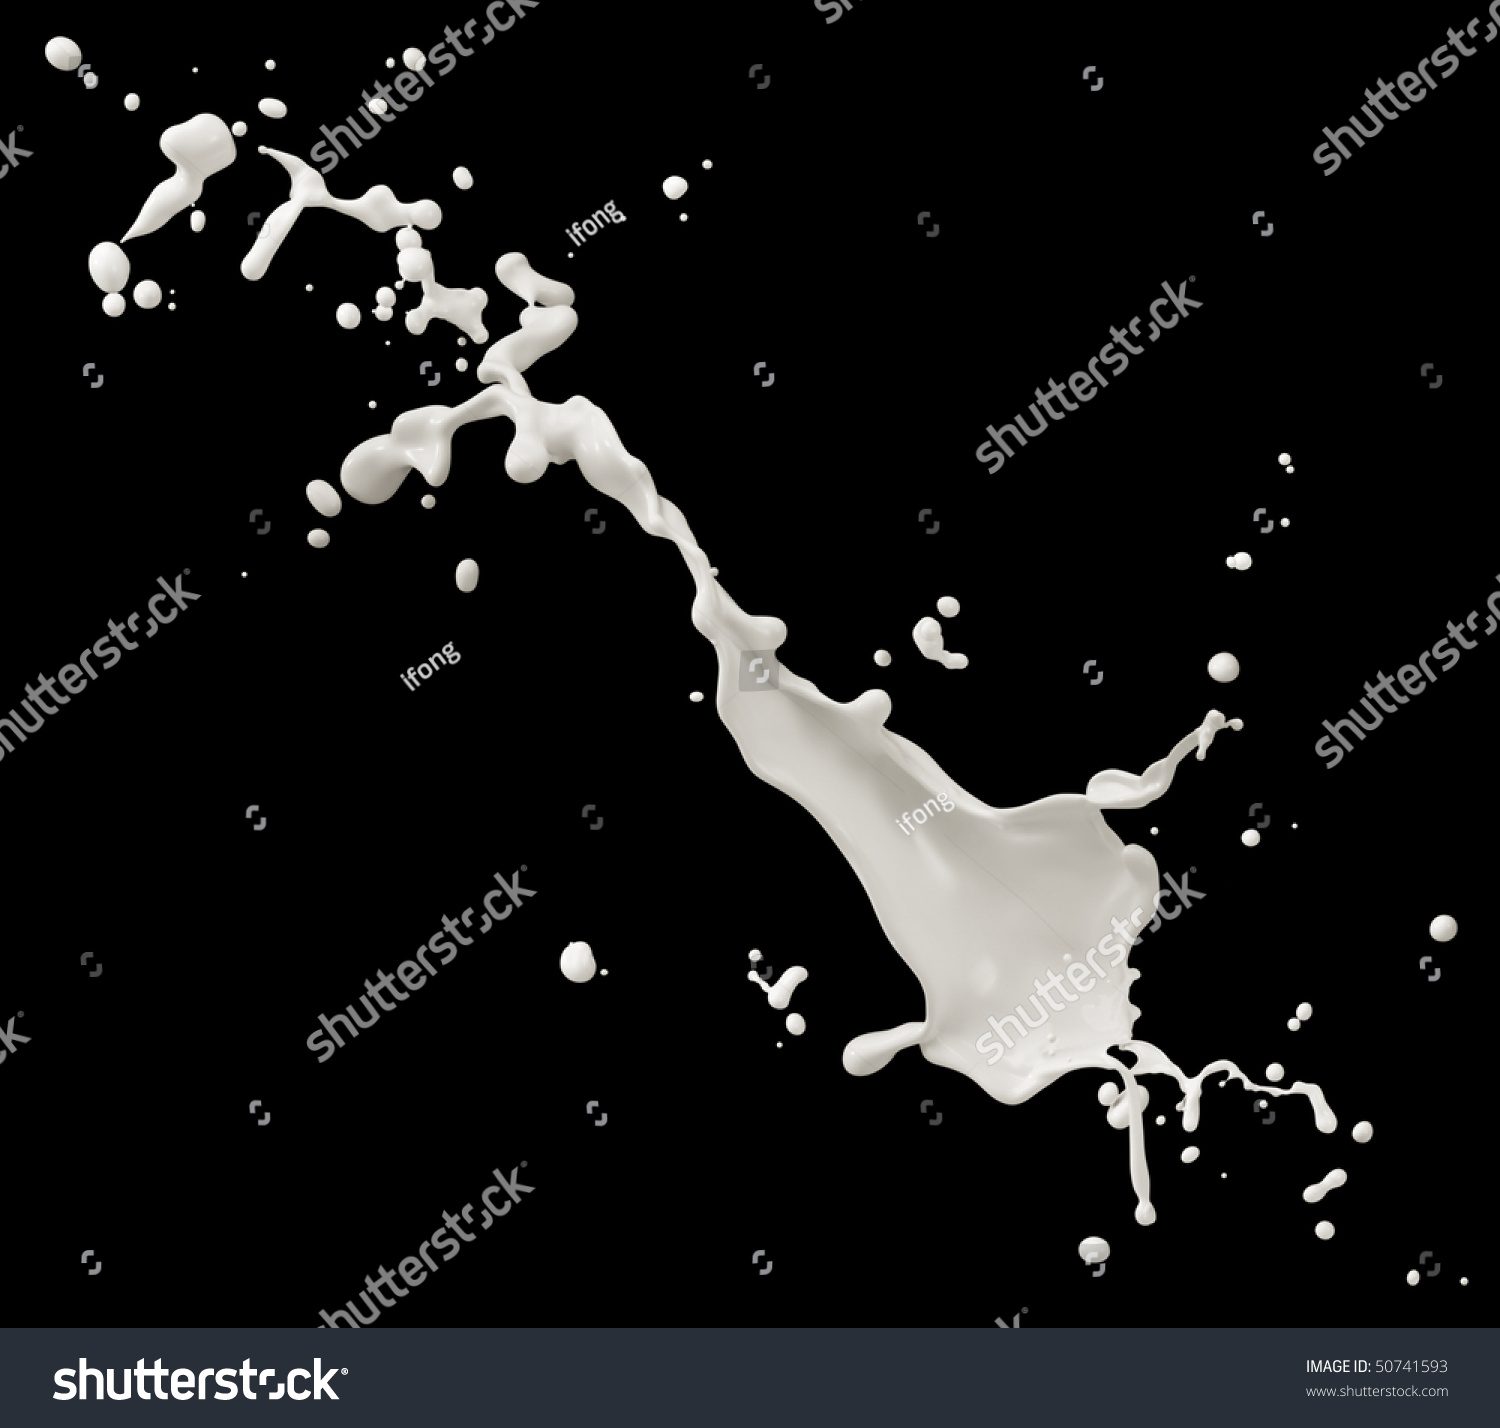 Milk Or White Liquid Splash On Black Background Stock ...